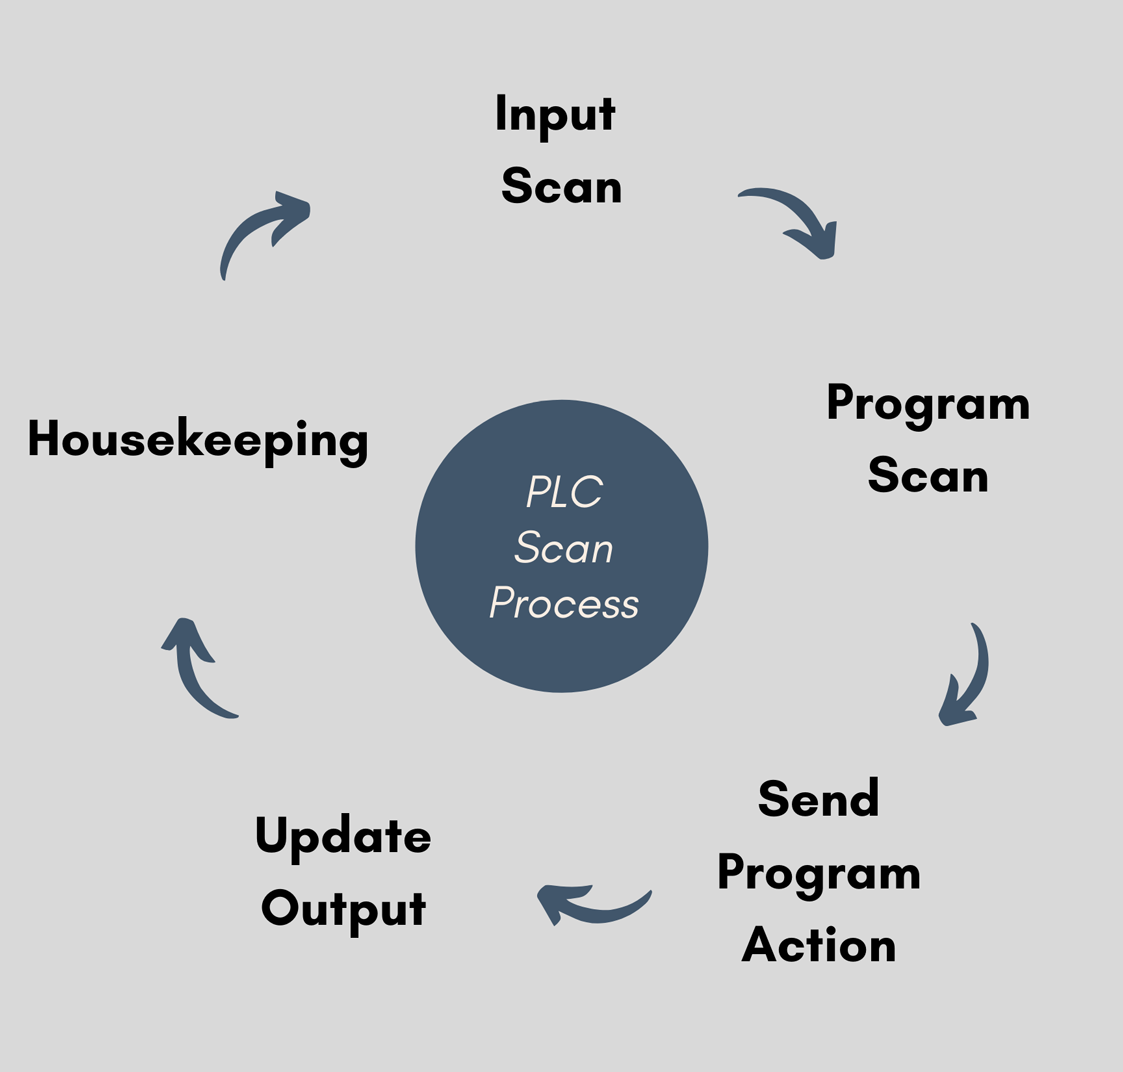 The PLC Scan Process